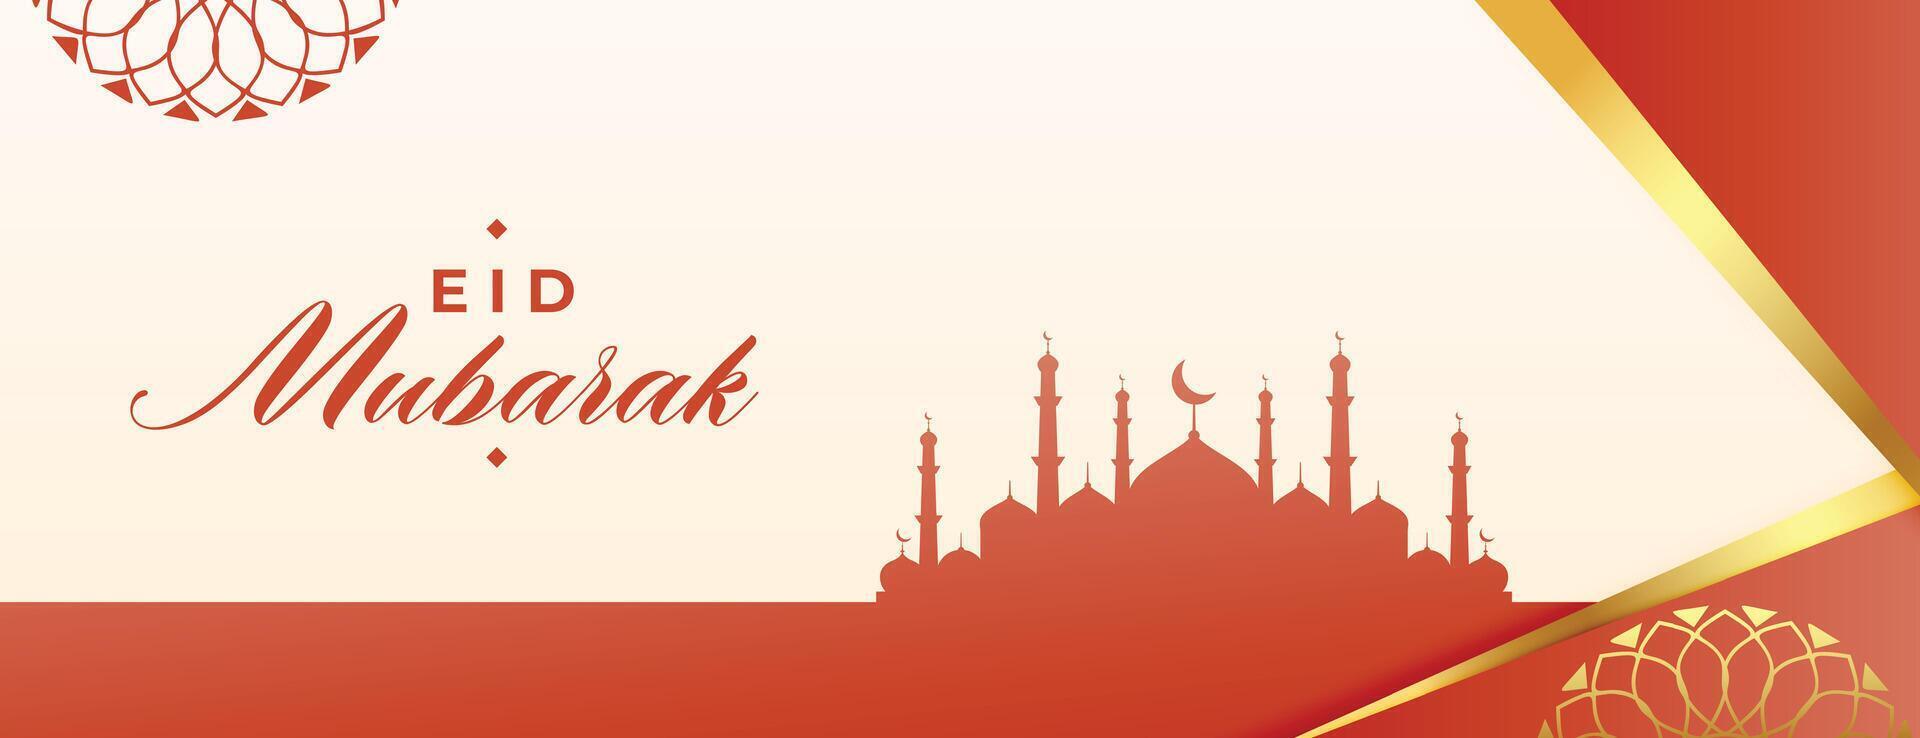 eid mubarak holiday wallpaper with mosque design vector